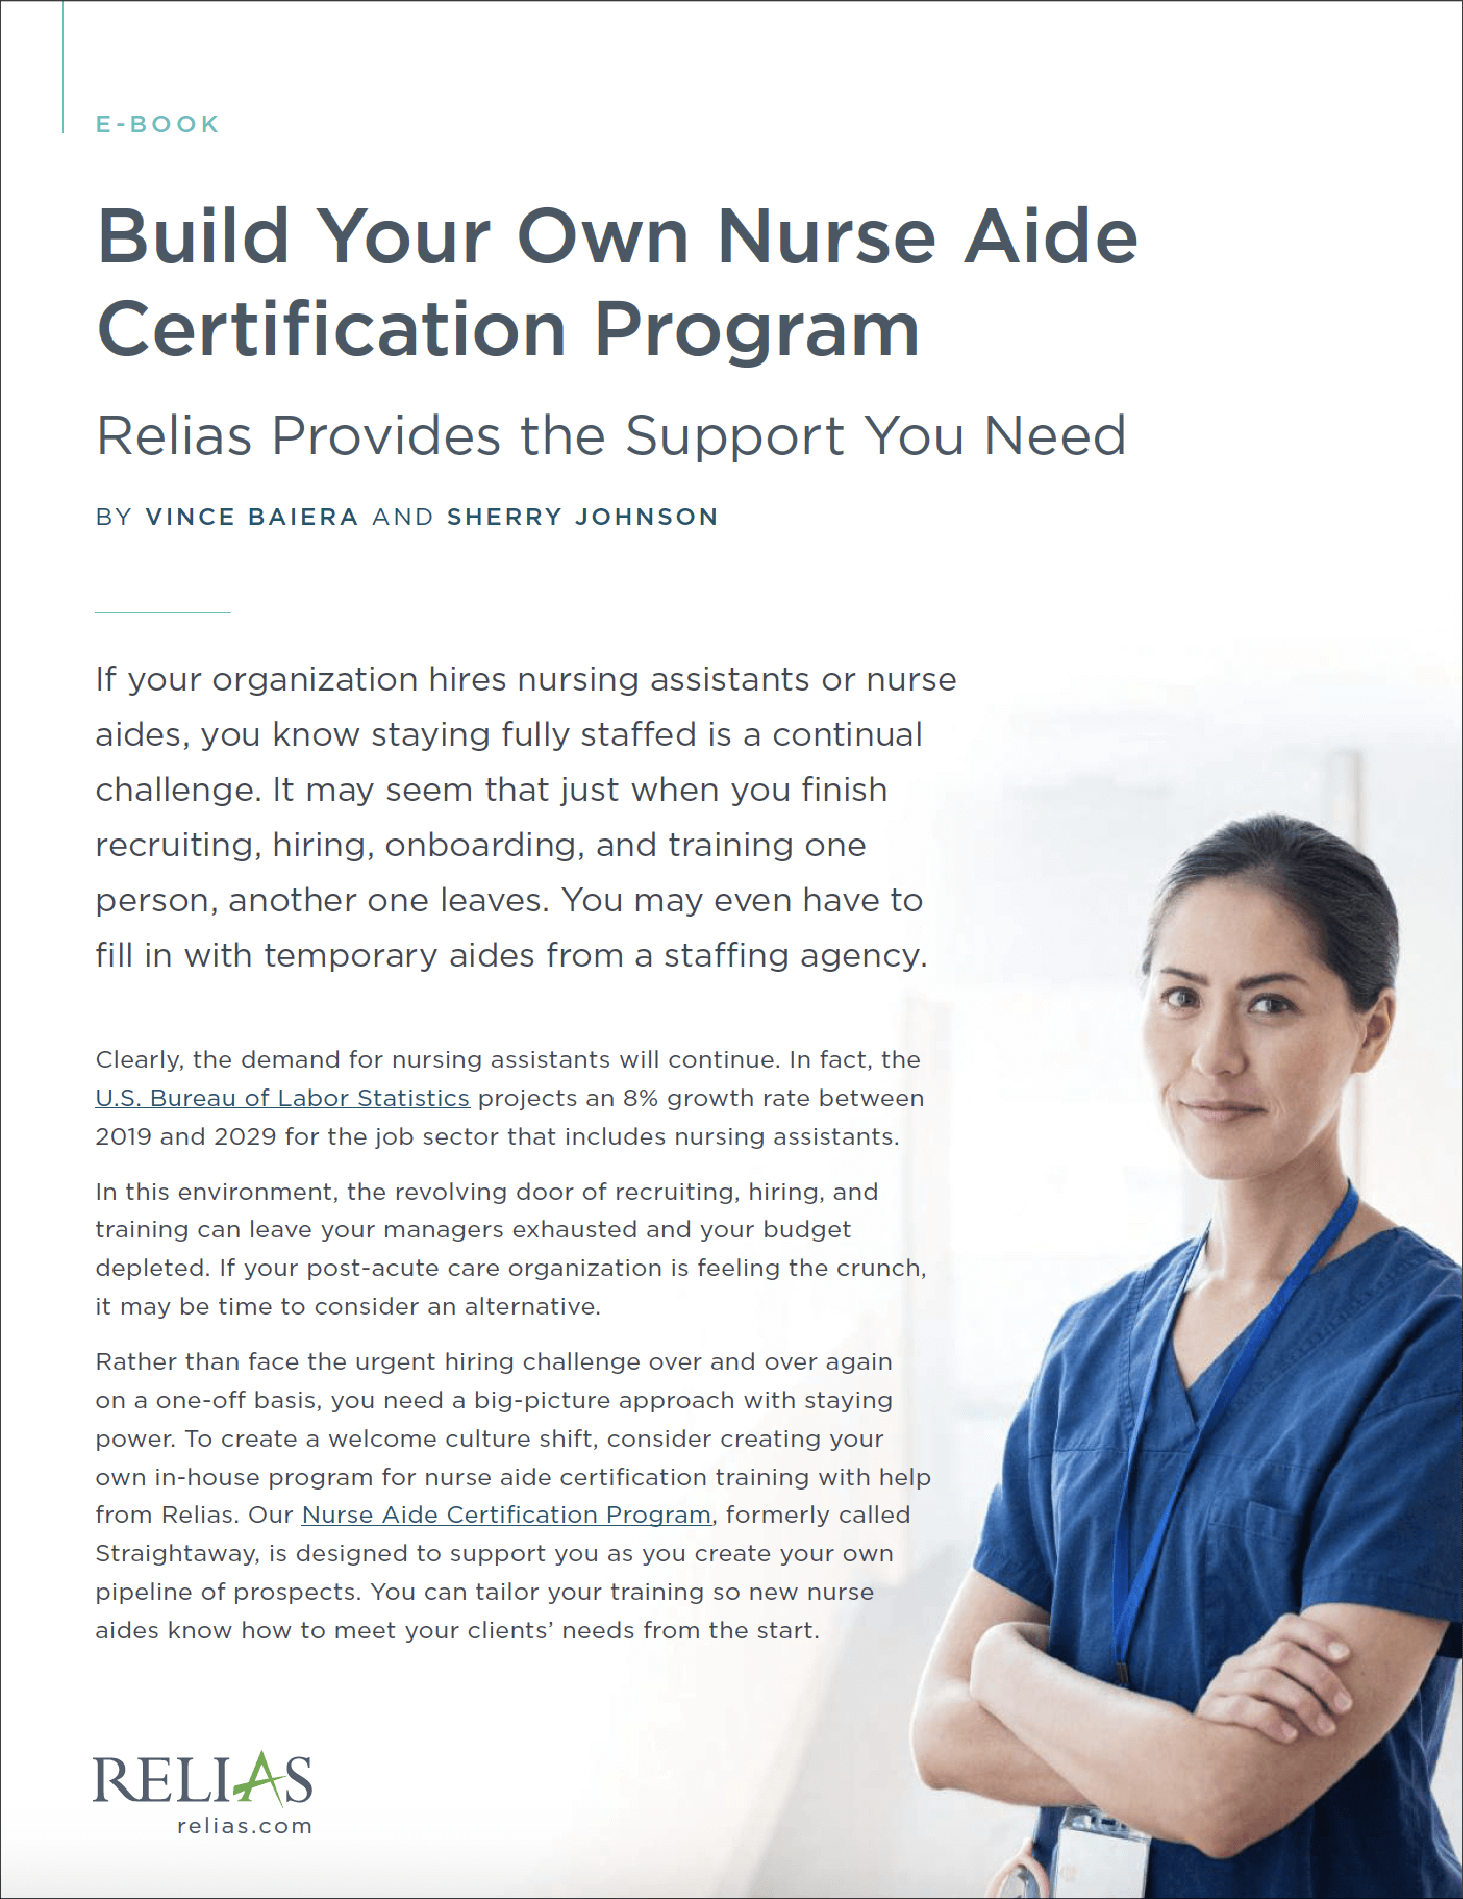 Build Your Own Nurse Certification Program e-book cover image